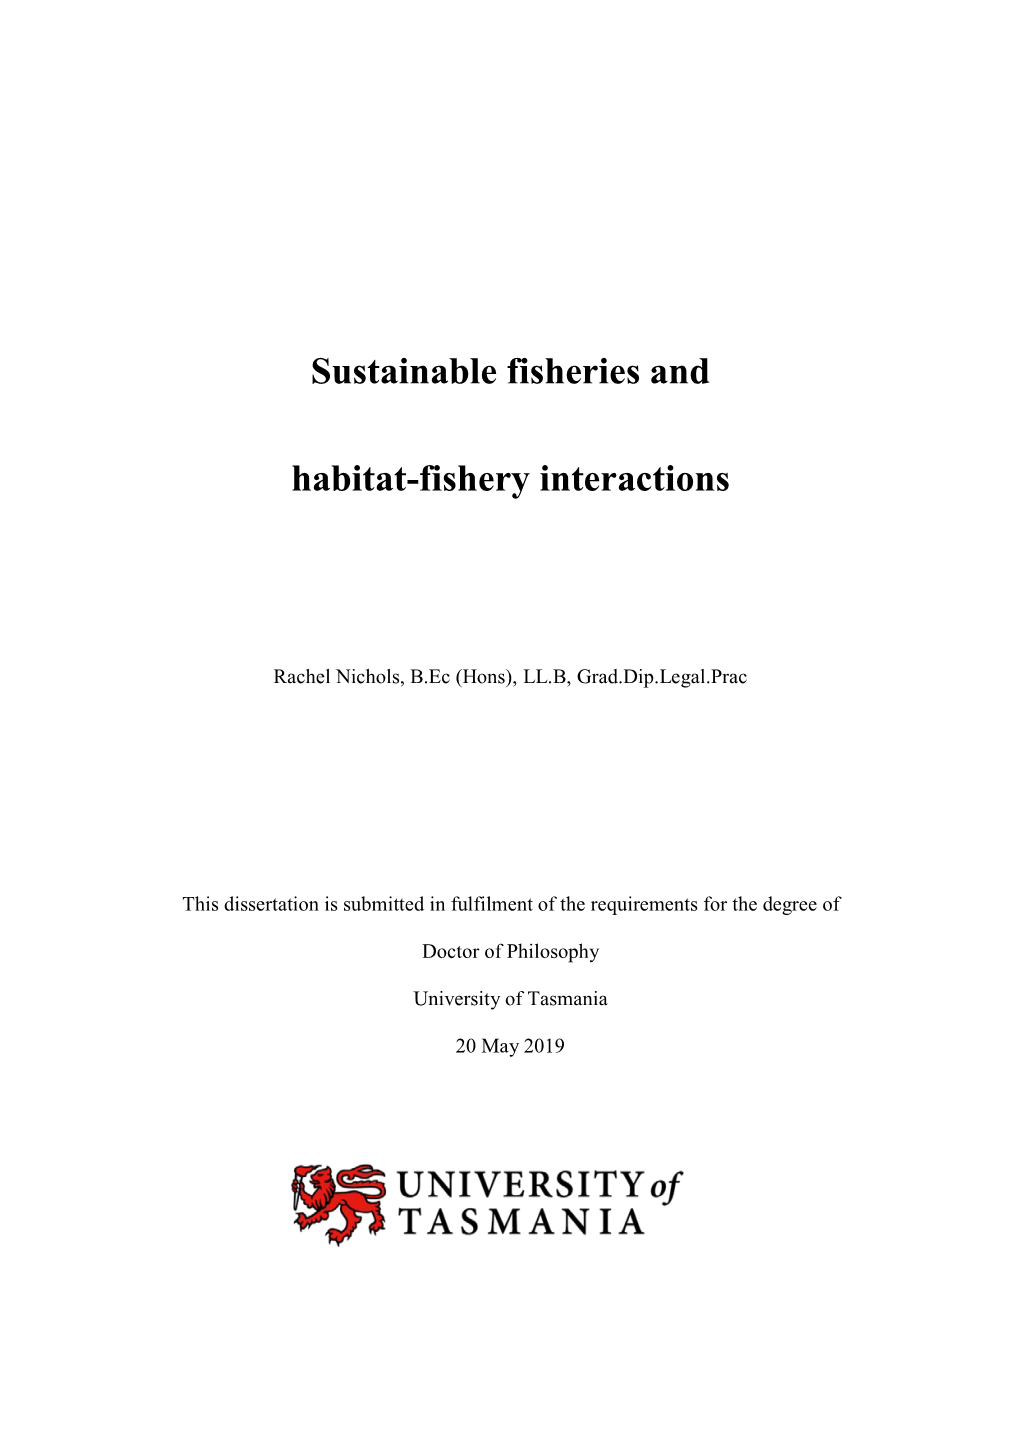 Sustainable Fisheries and Habitat-Fishery Interactions